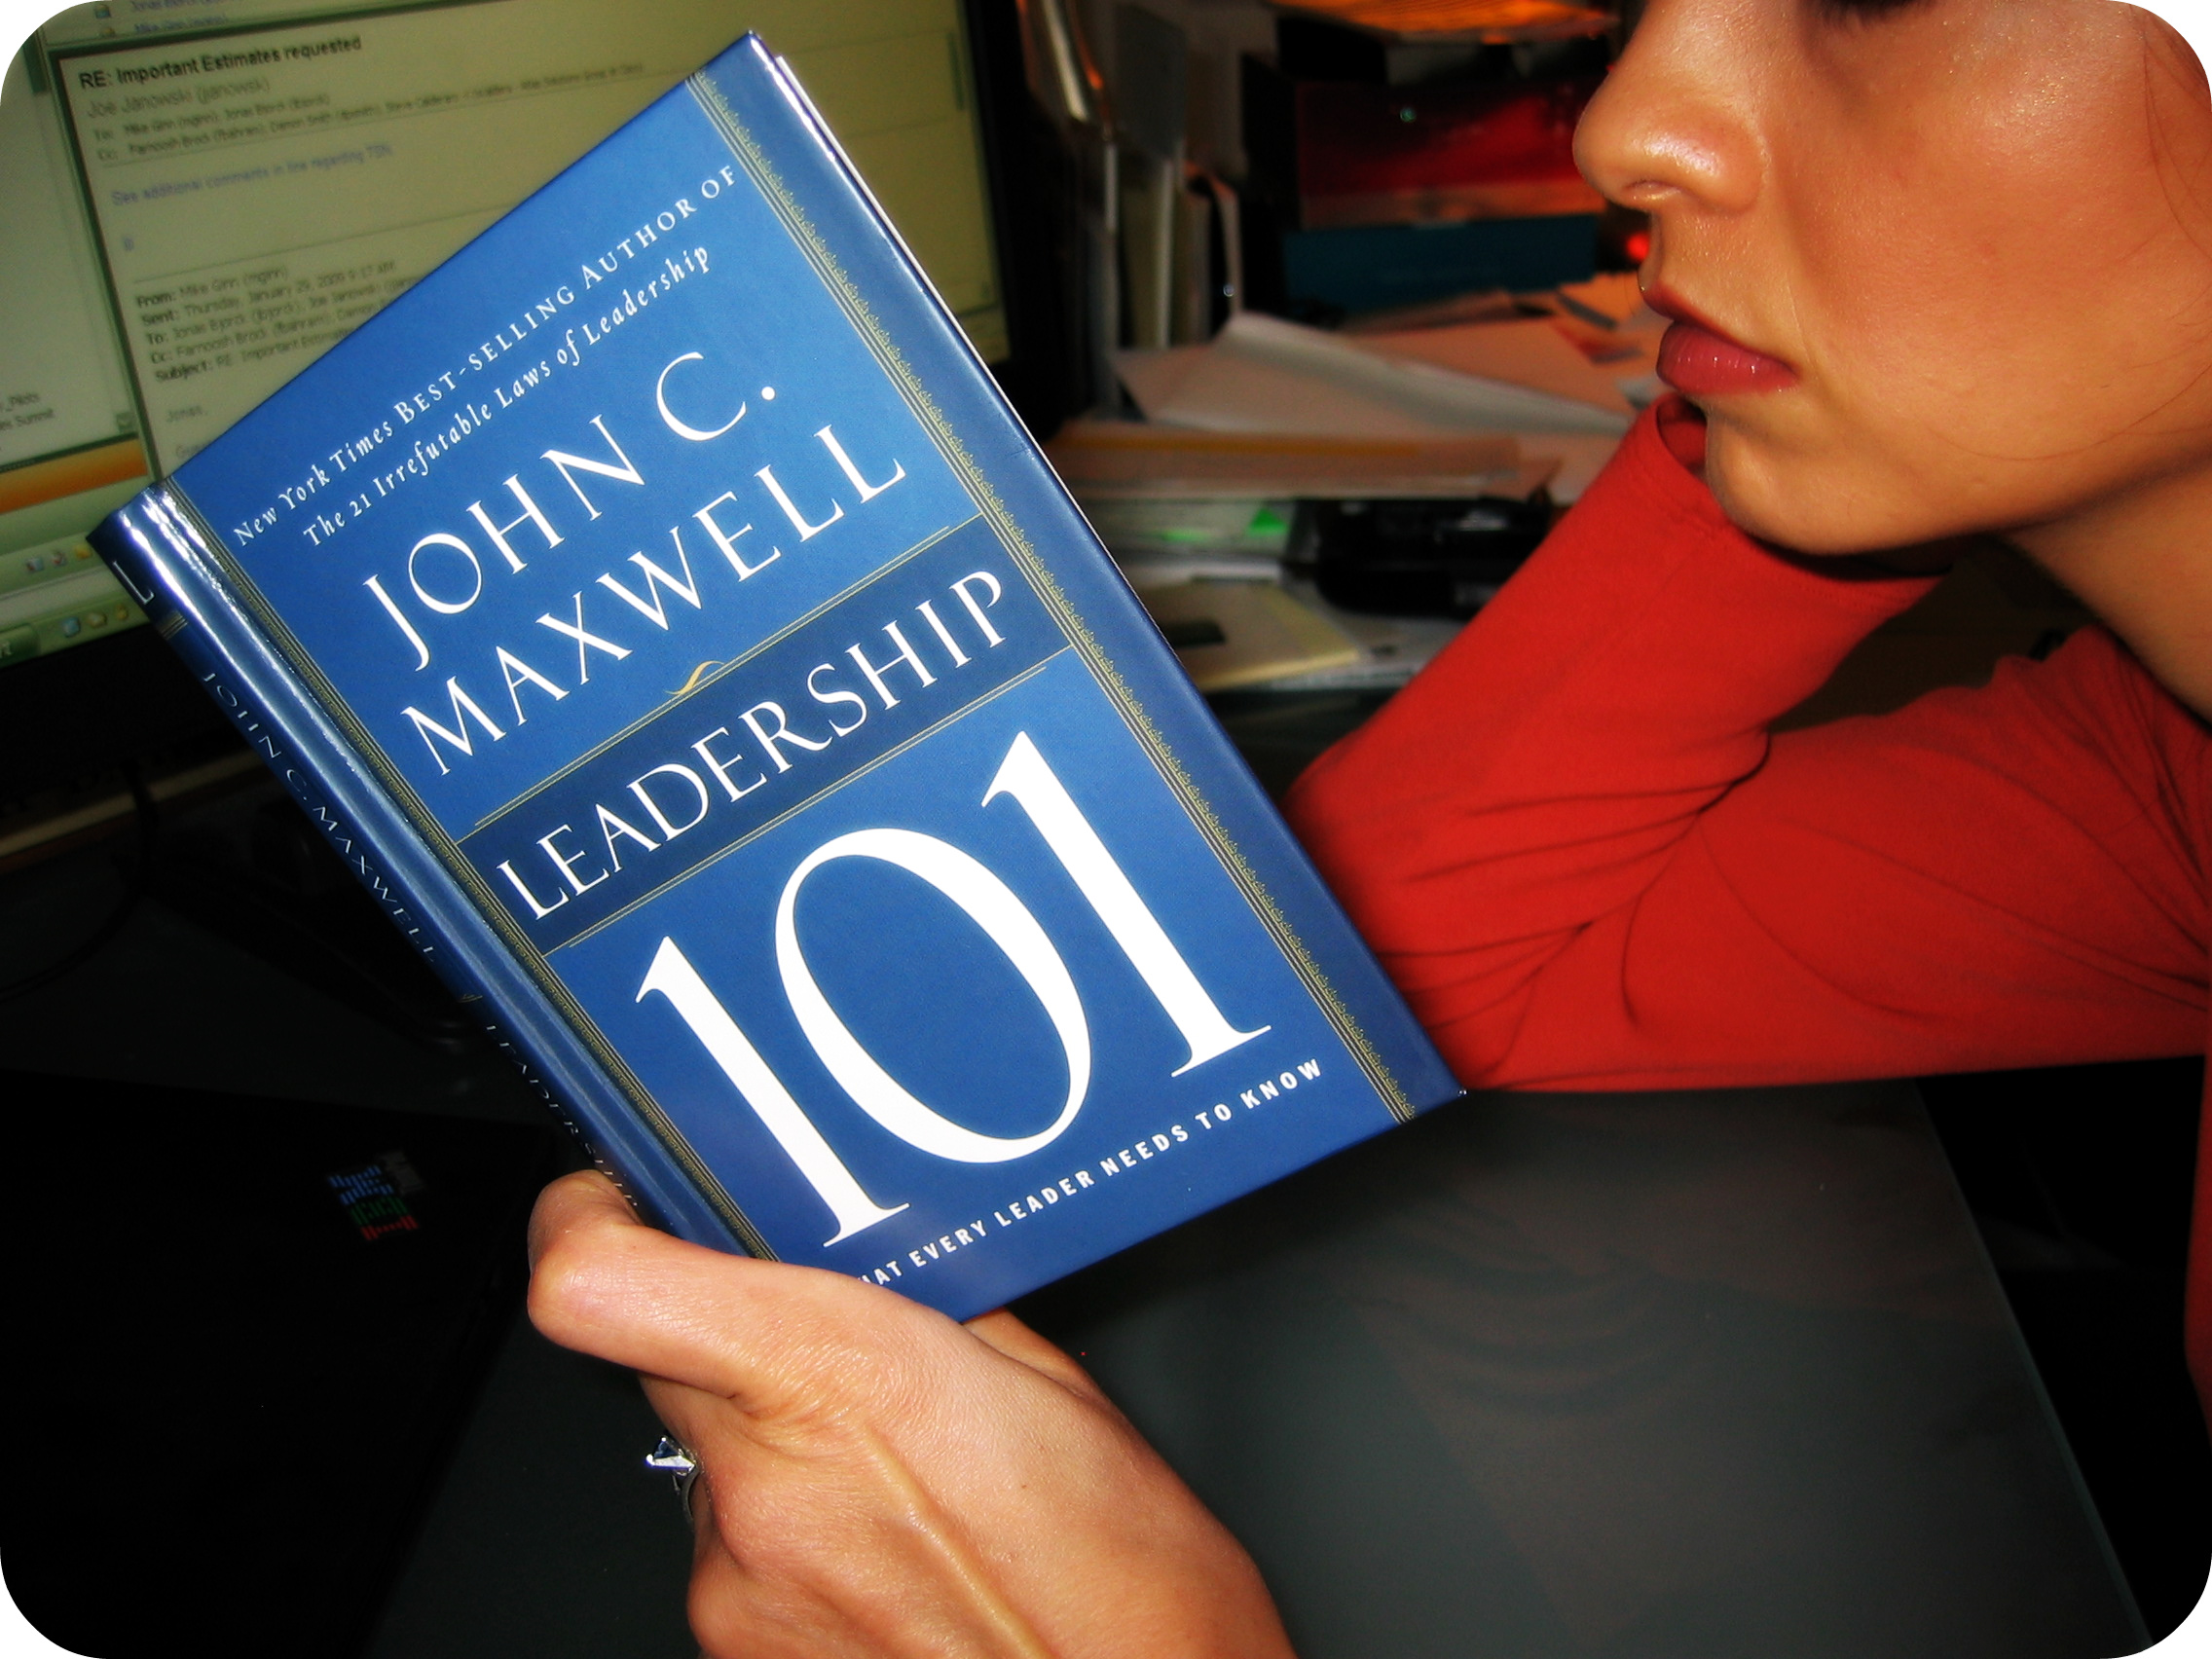 Maxwell Leadership 101 reading